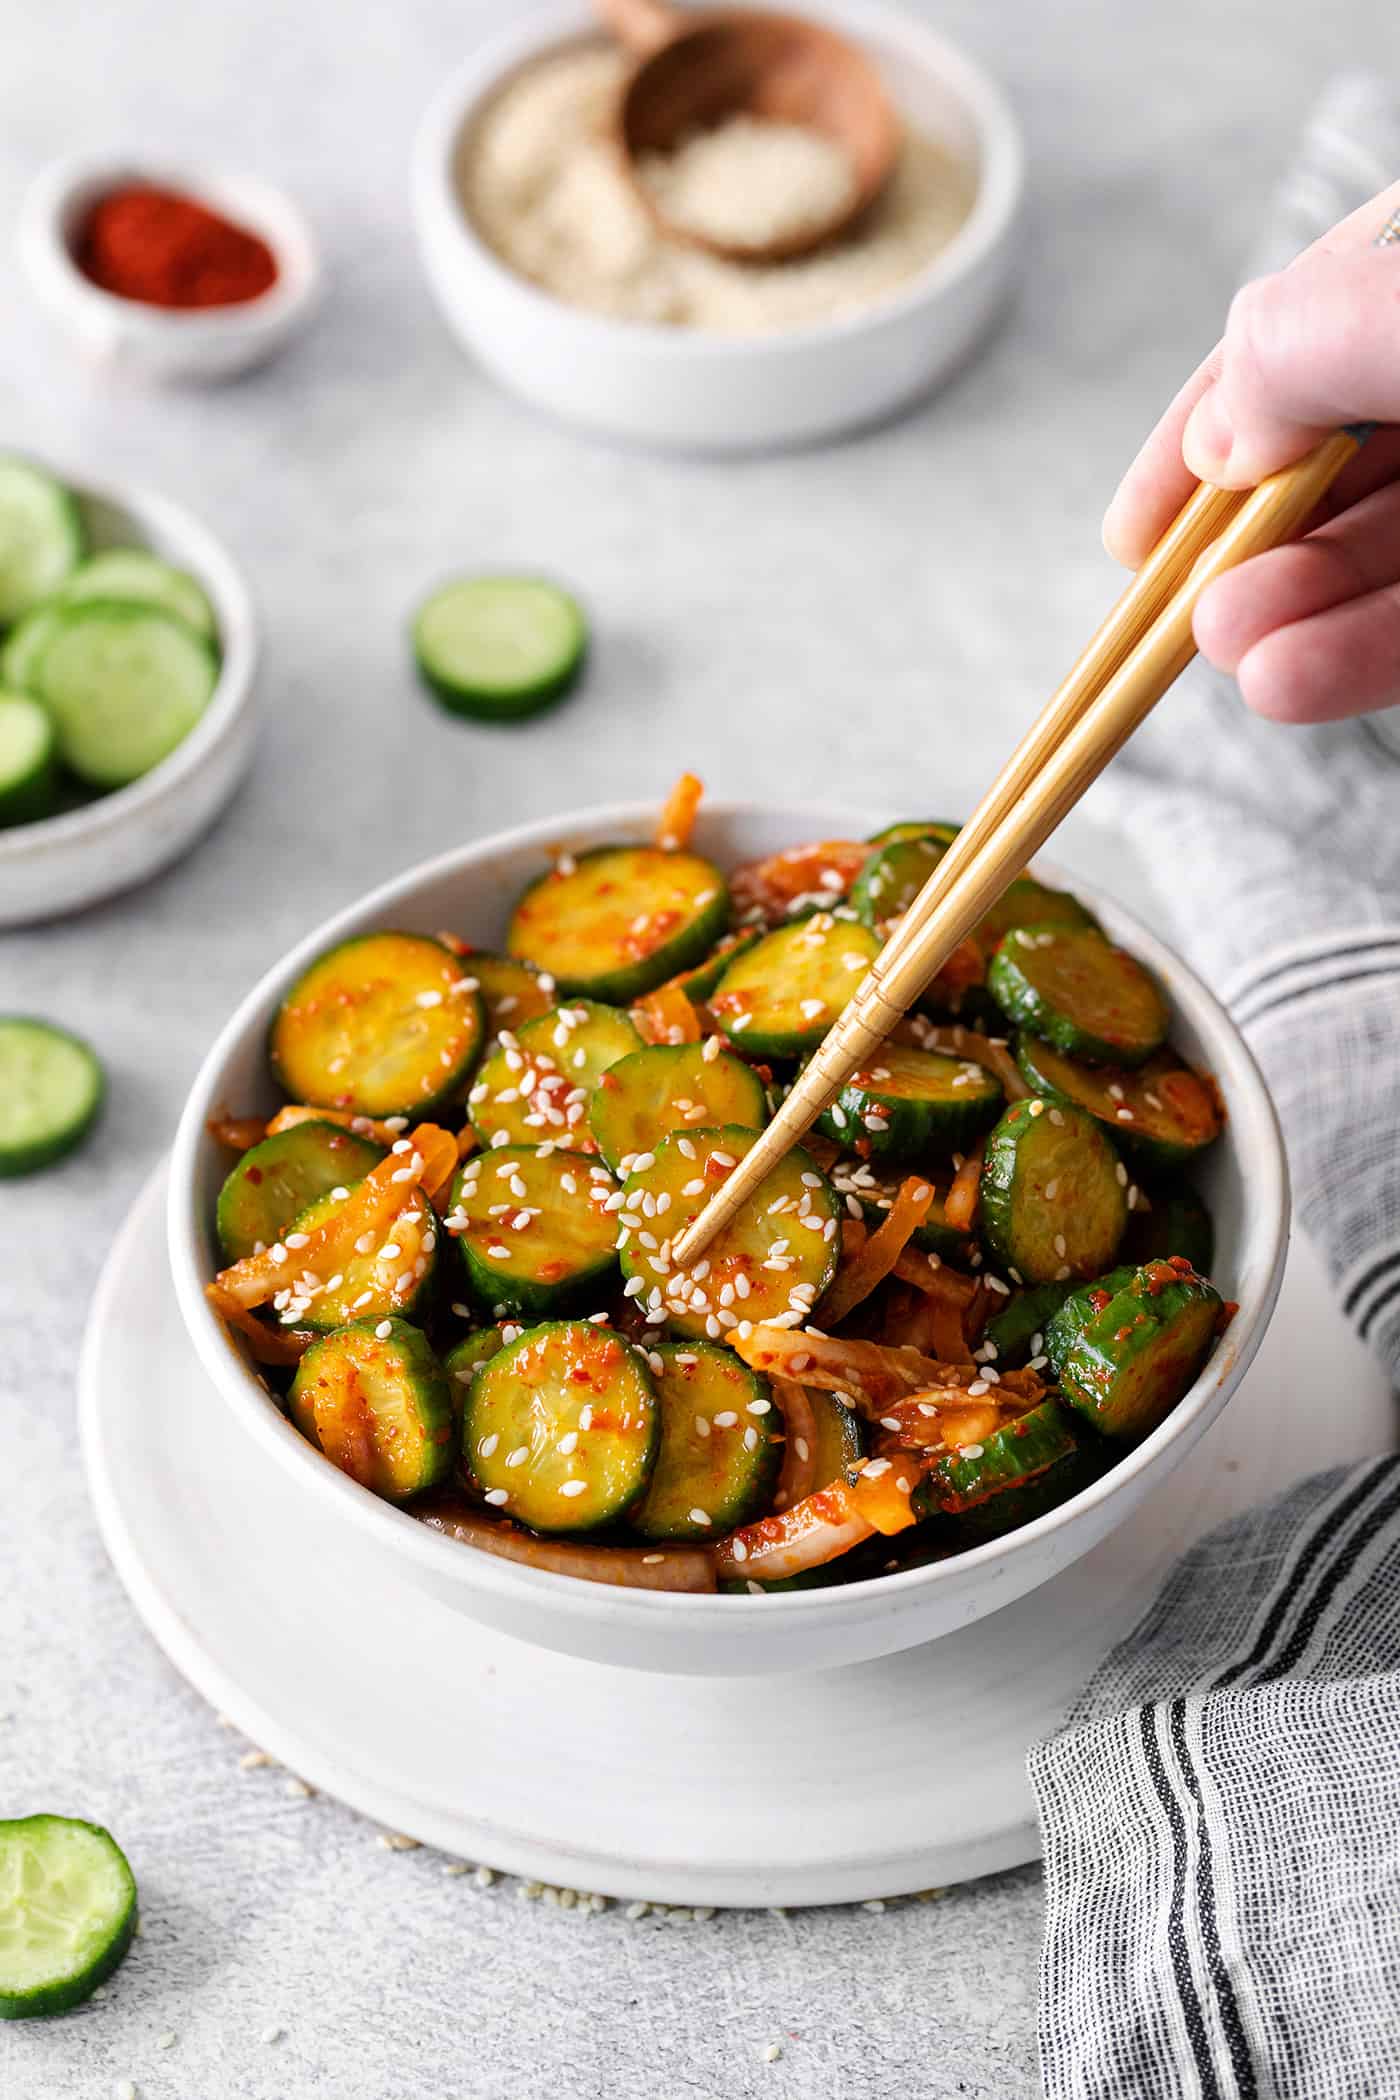 Chopsticks grabbing cucumber kimchi from a bowl